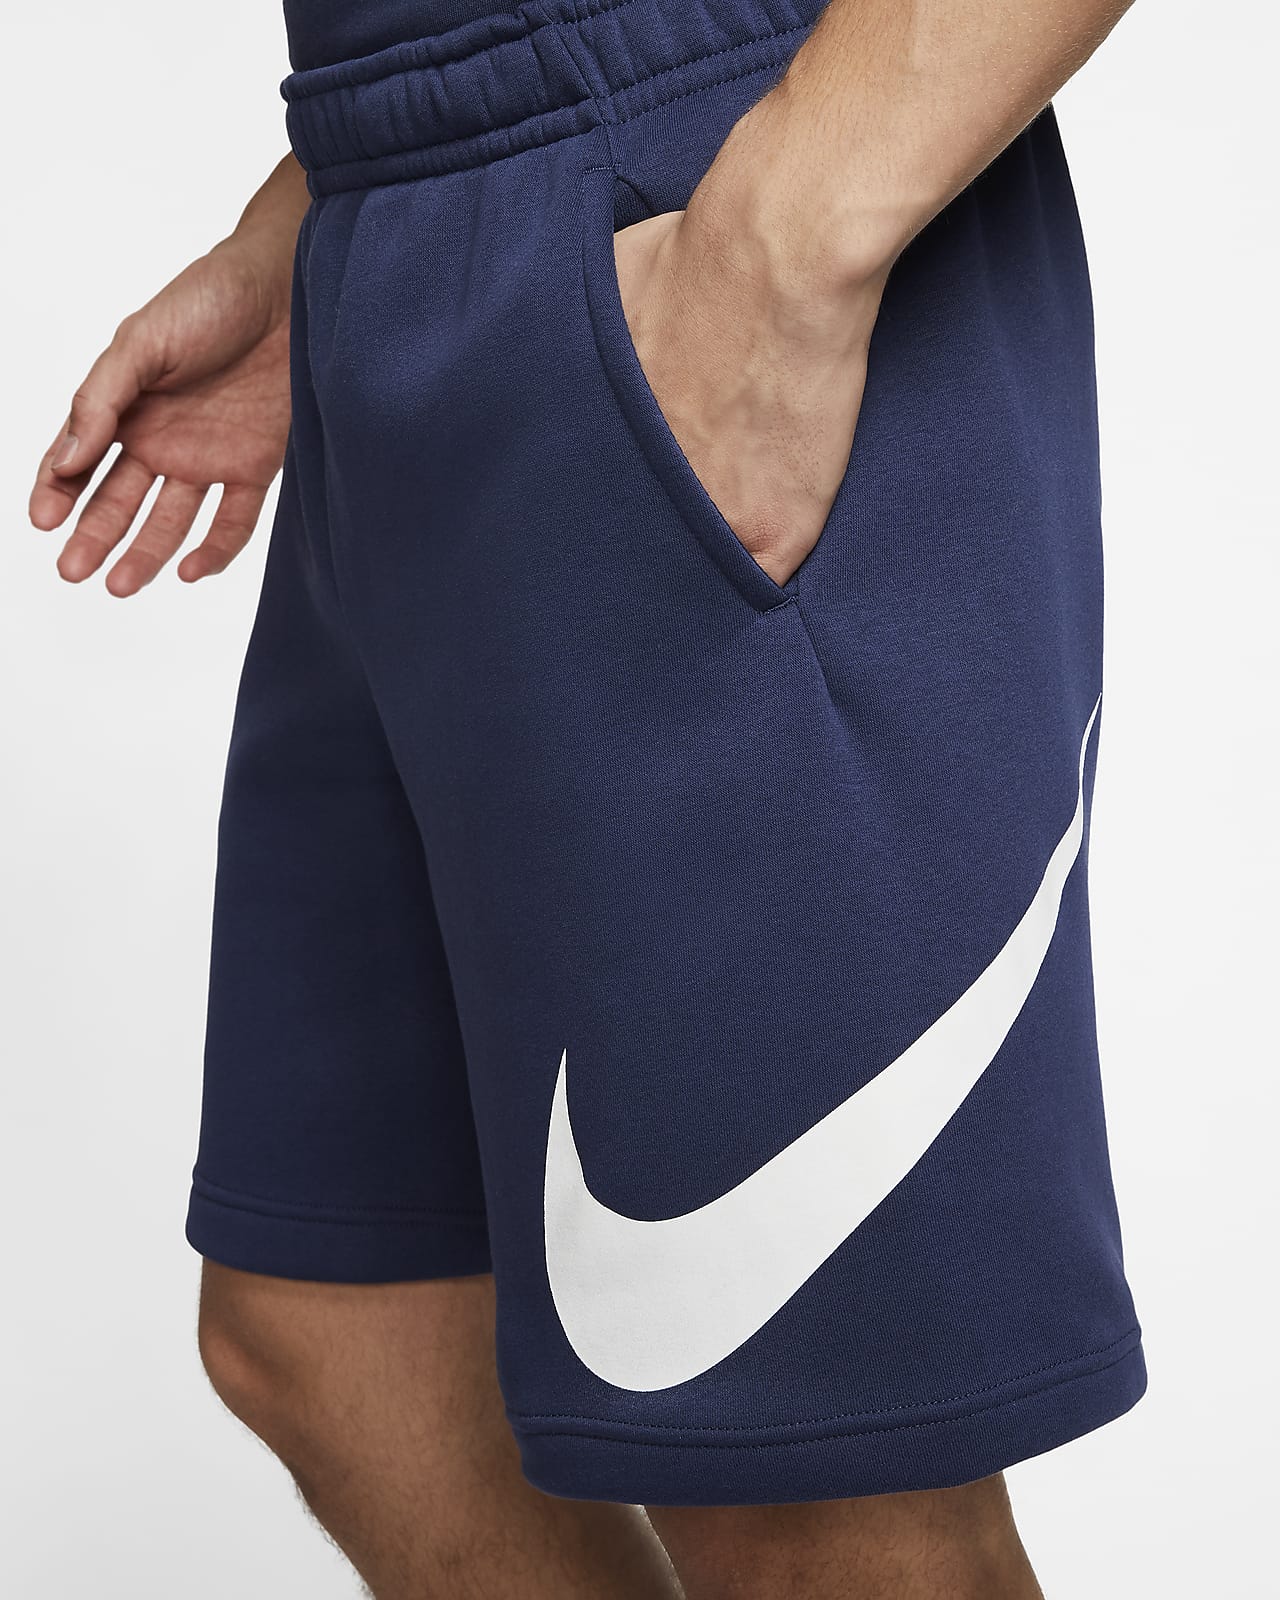 blue nike sweat shorts